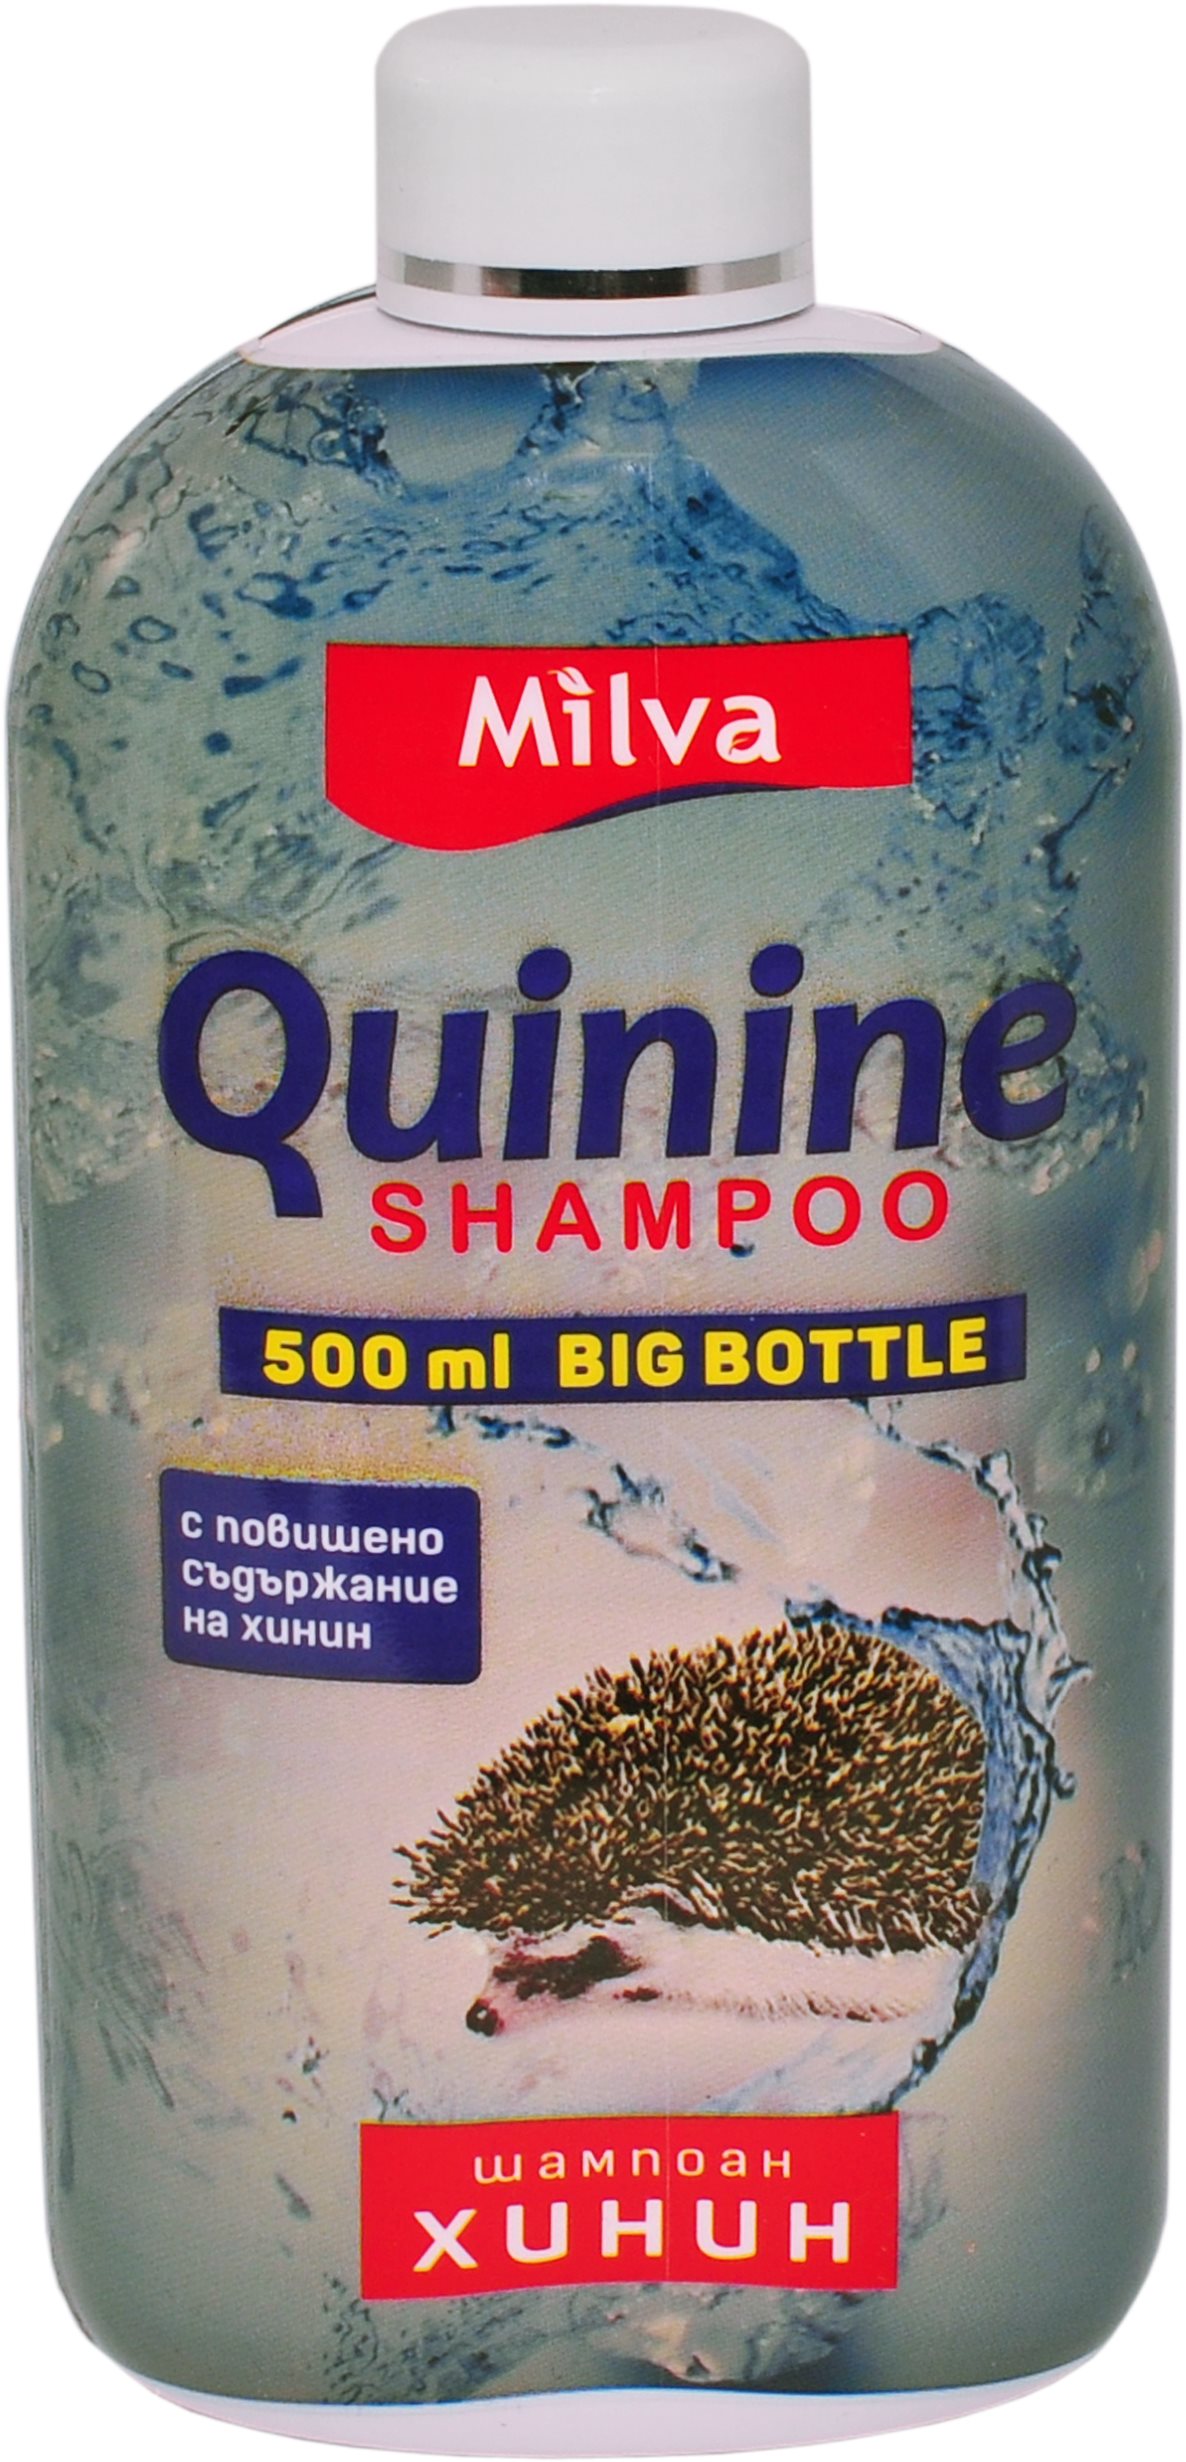 MILVA Chinin 500 ml